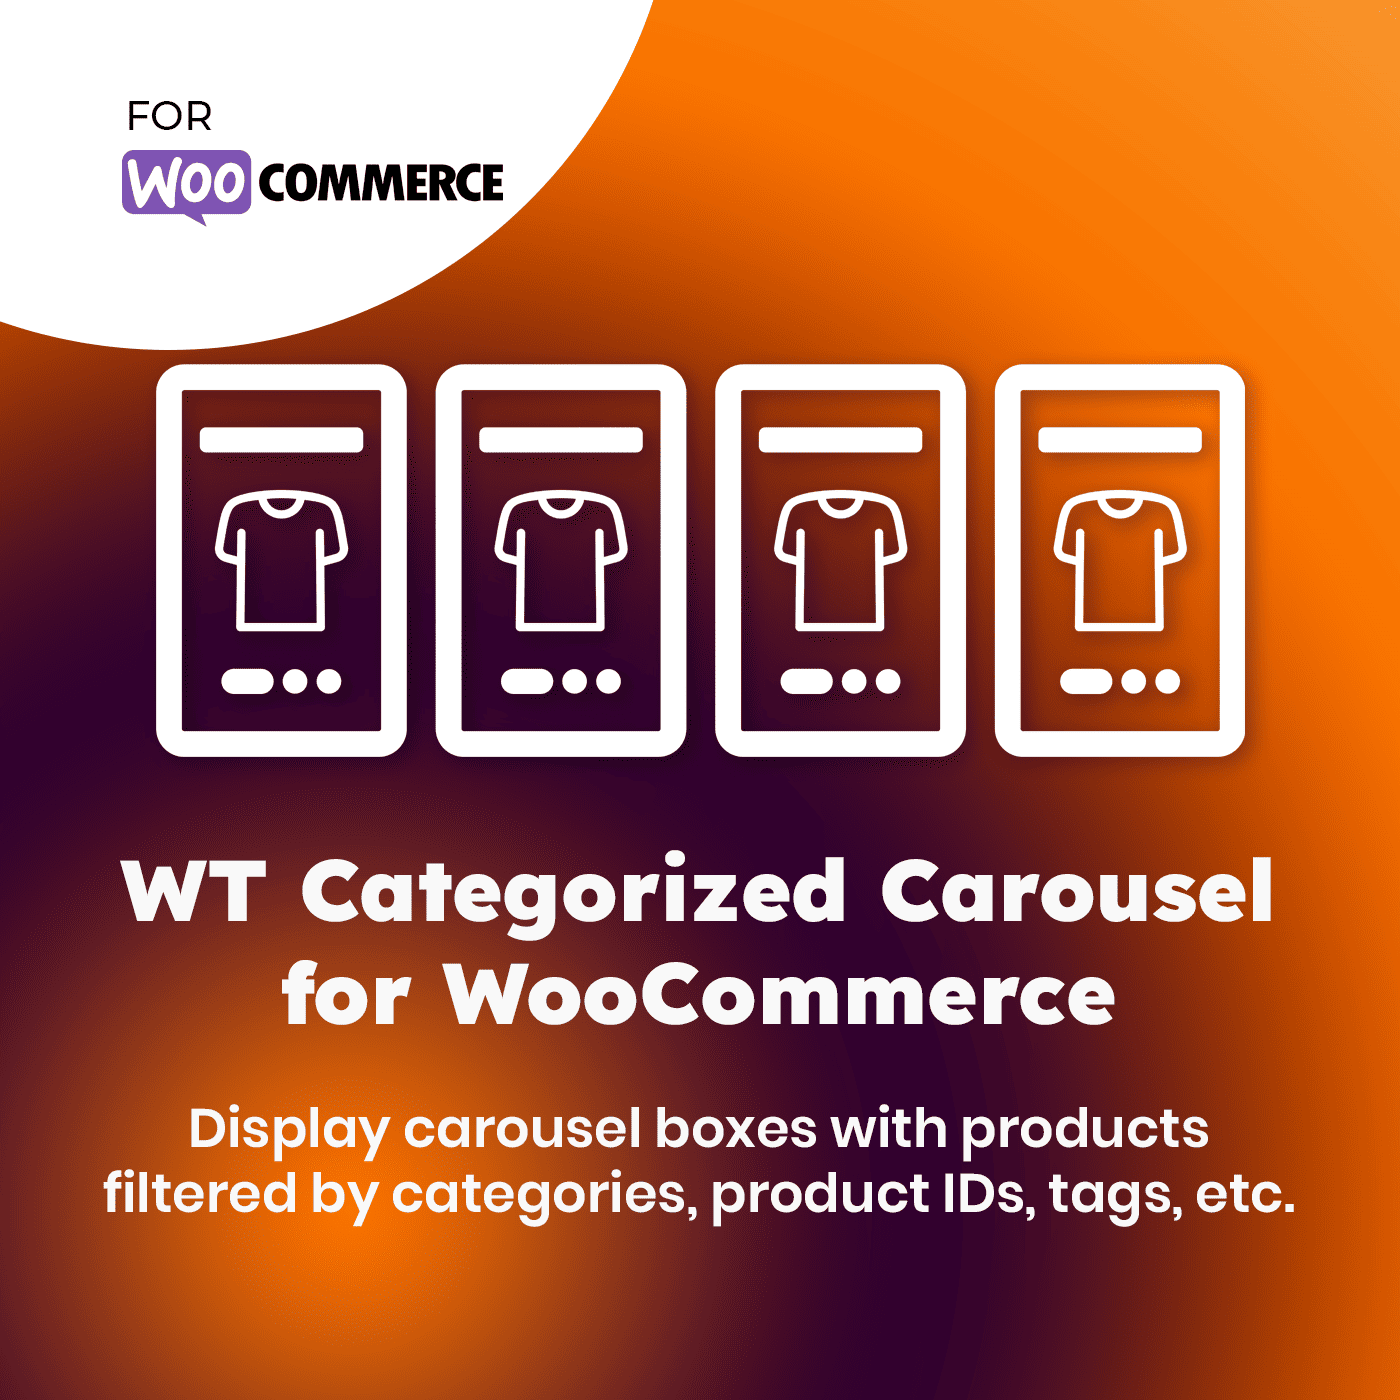 WT Categorized Carousel for WooCommerce - WordPress Plugin for WooCommerce